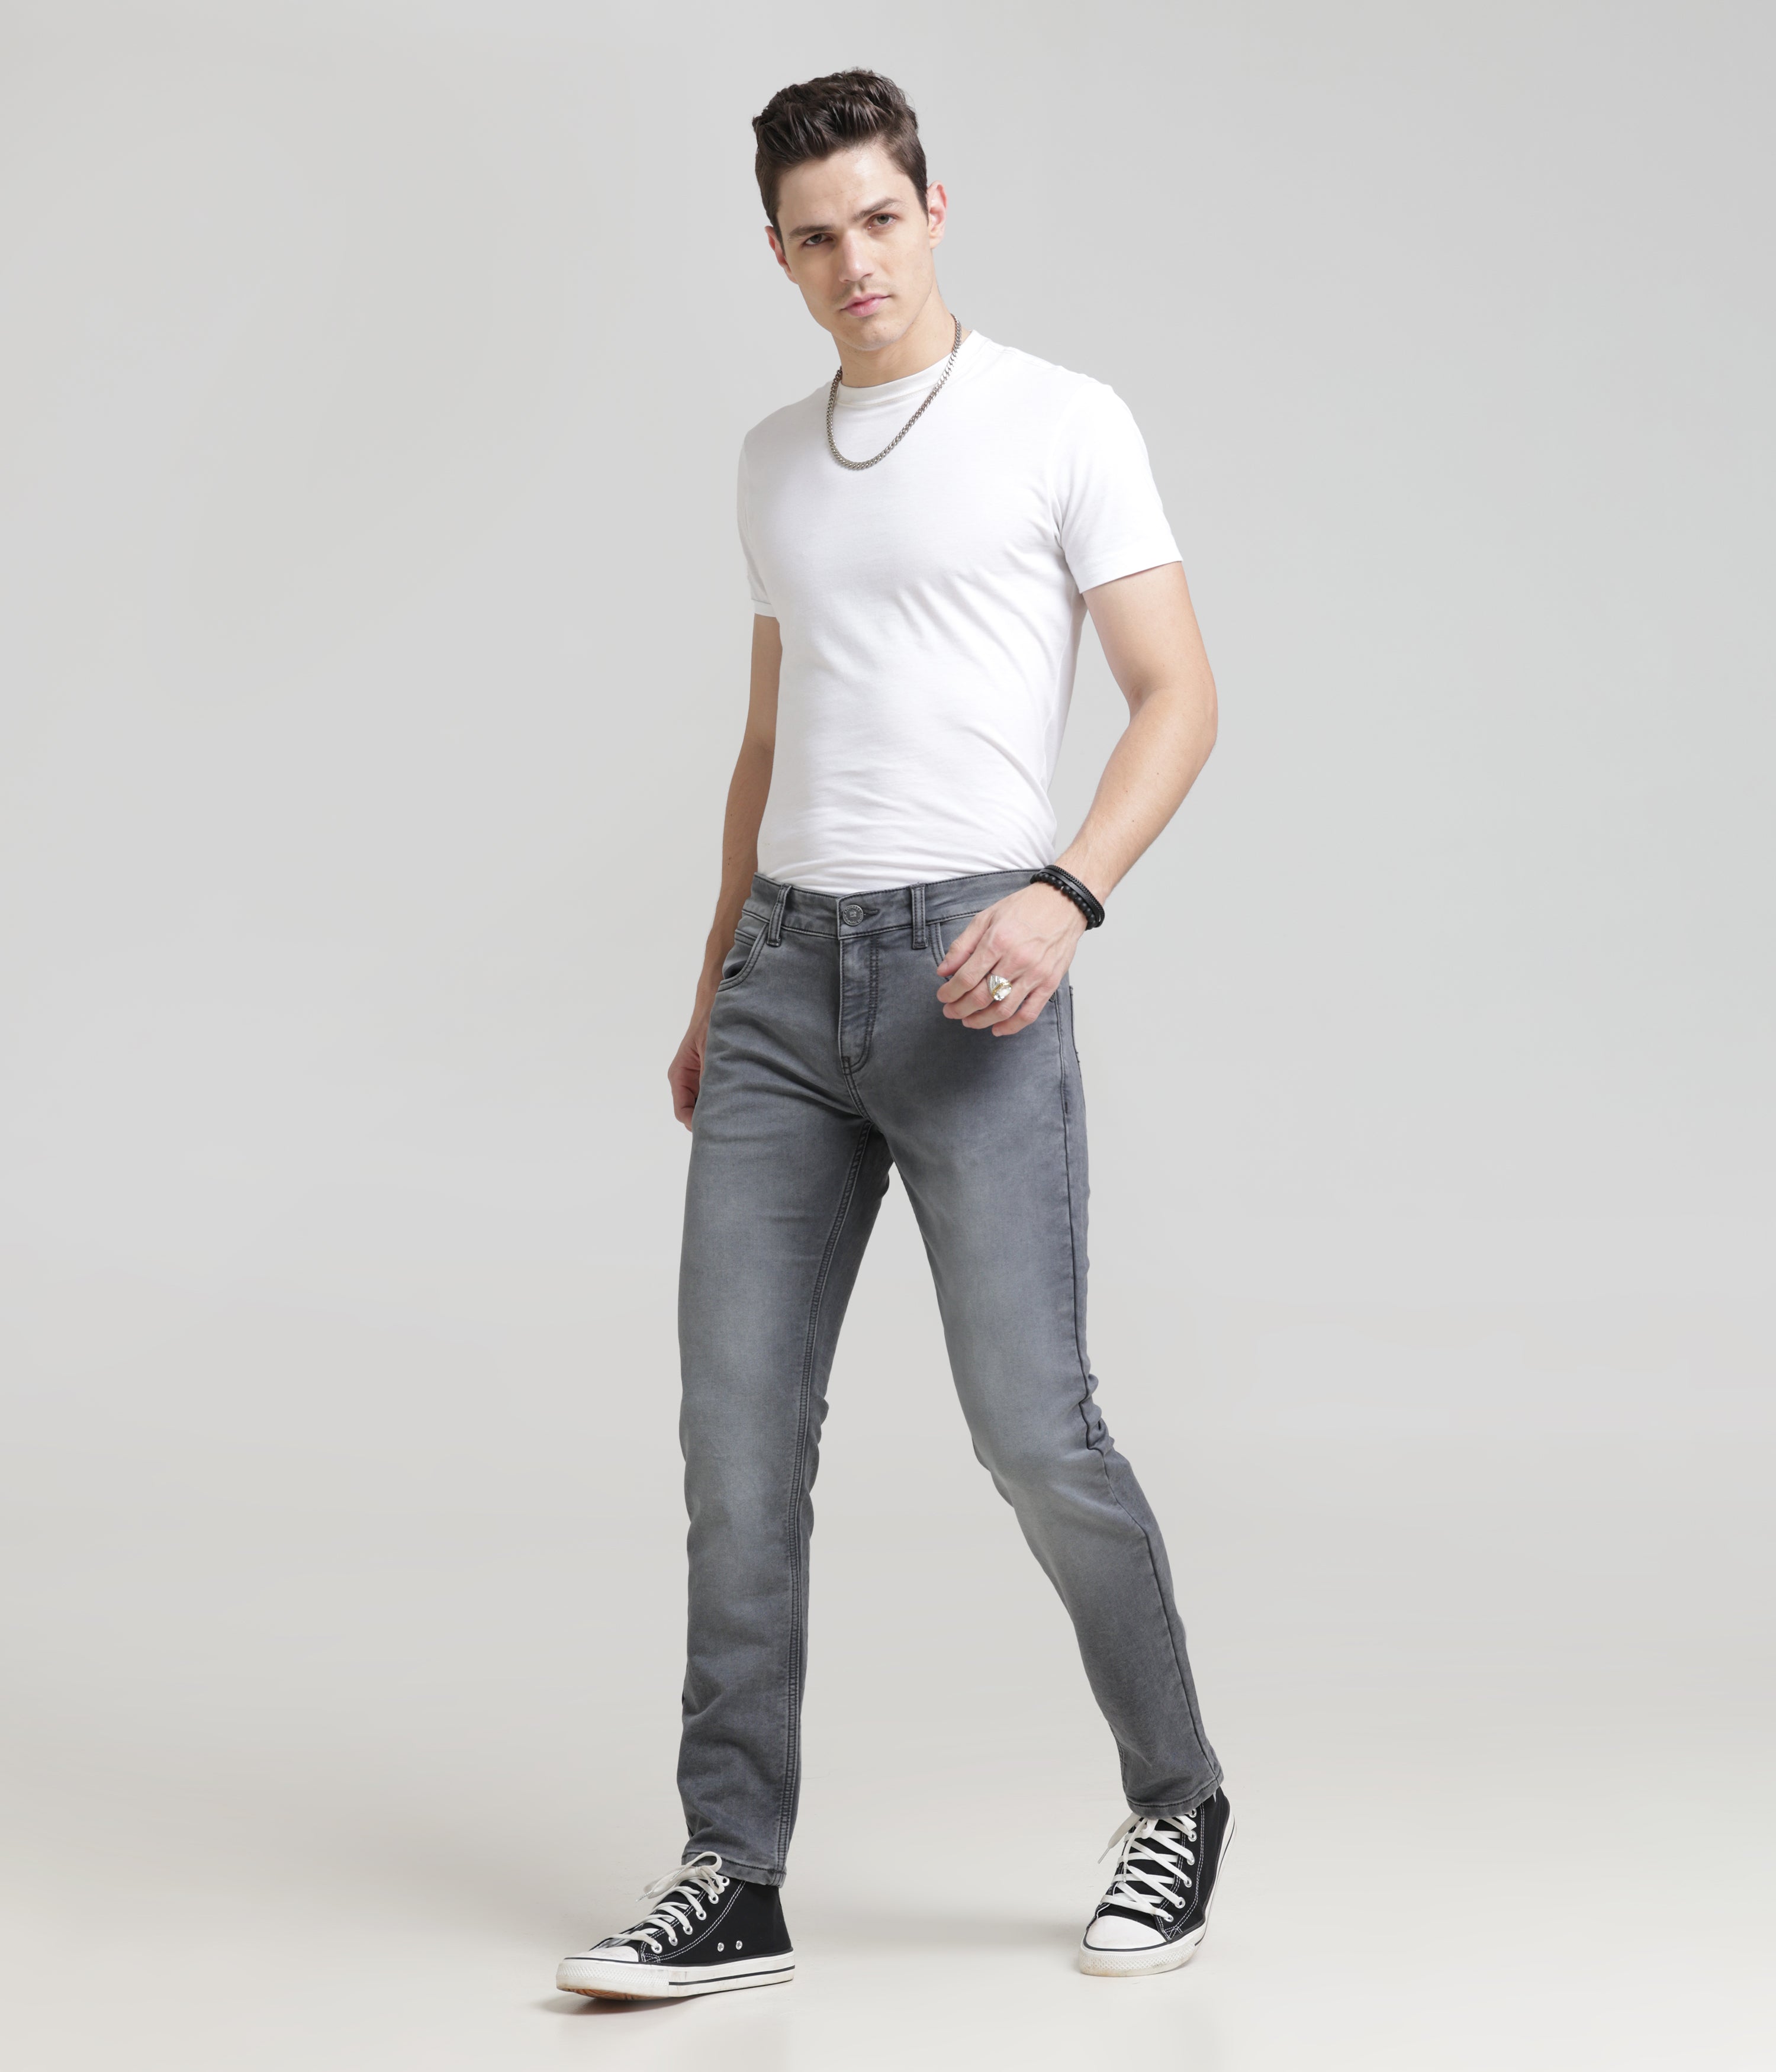 Grey Denim Jeans: Stylish Details, Versatile Comfort for Any Look